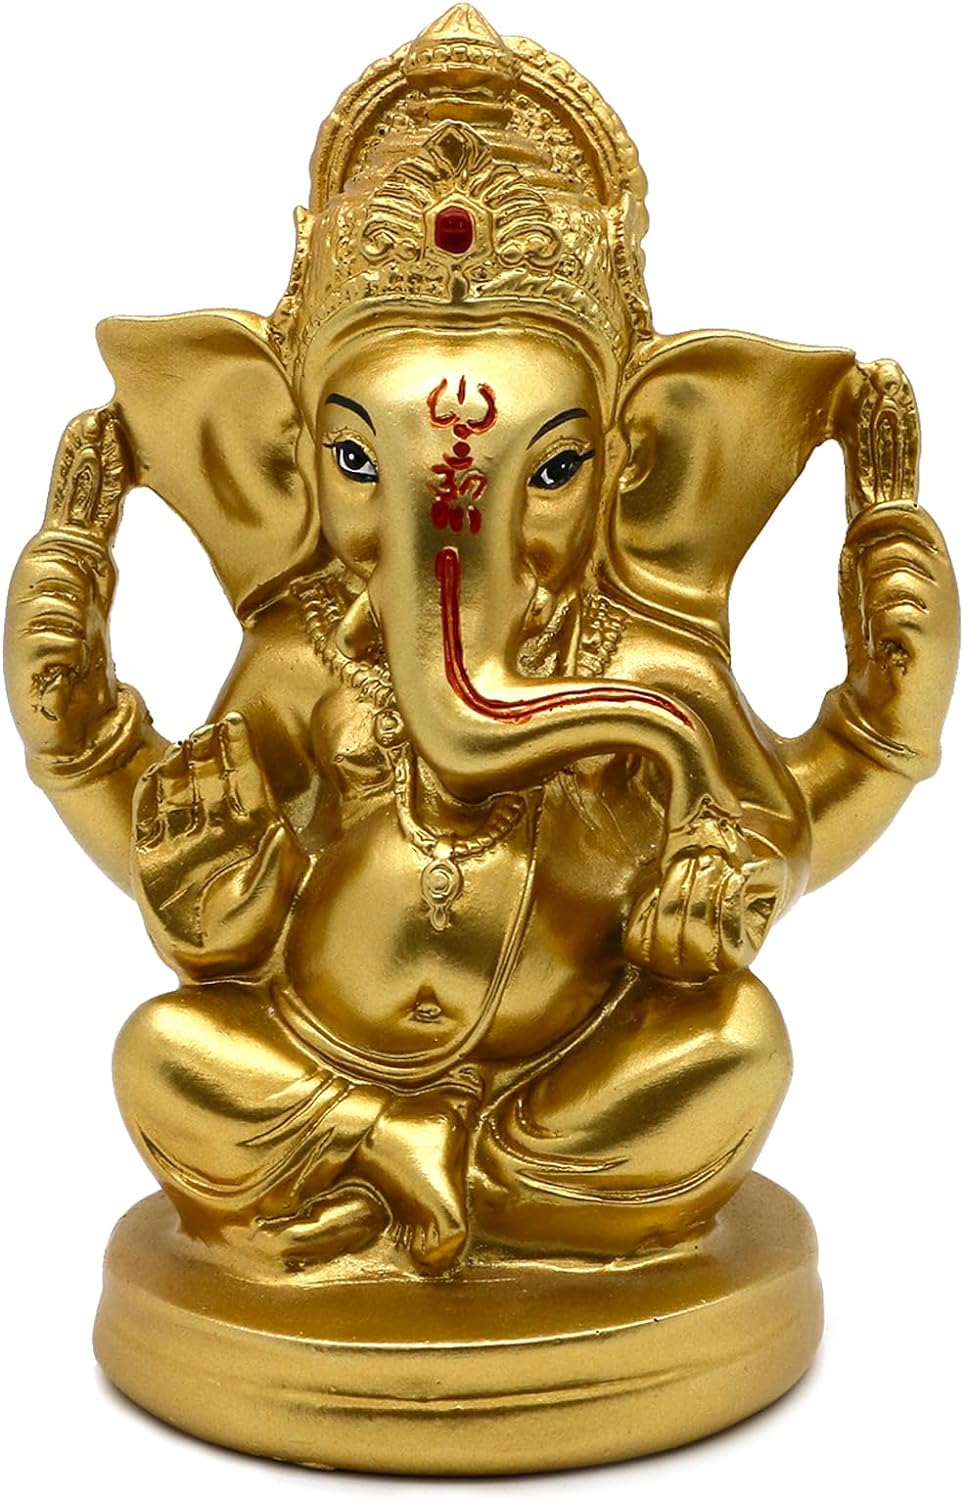 Hindu God Lord Ganesha Statues - 5 H India God Ganesha Idol Home Mandir Pooja Decor Indian Ganesha Figurine Temple Puja Items Diwali Gift for Friends Relatives